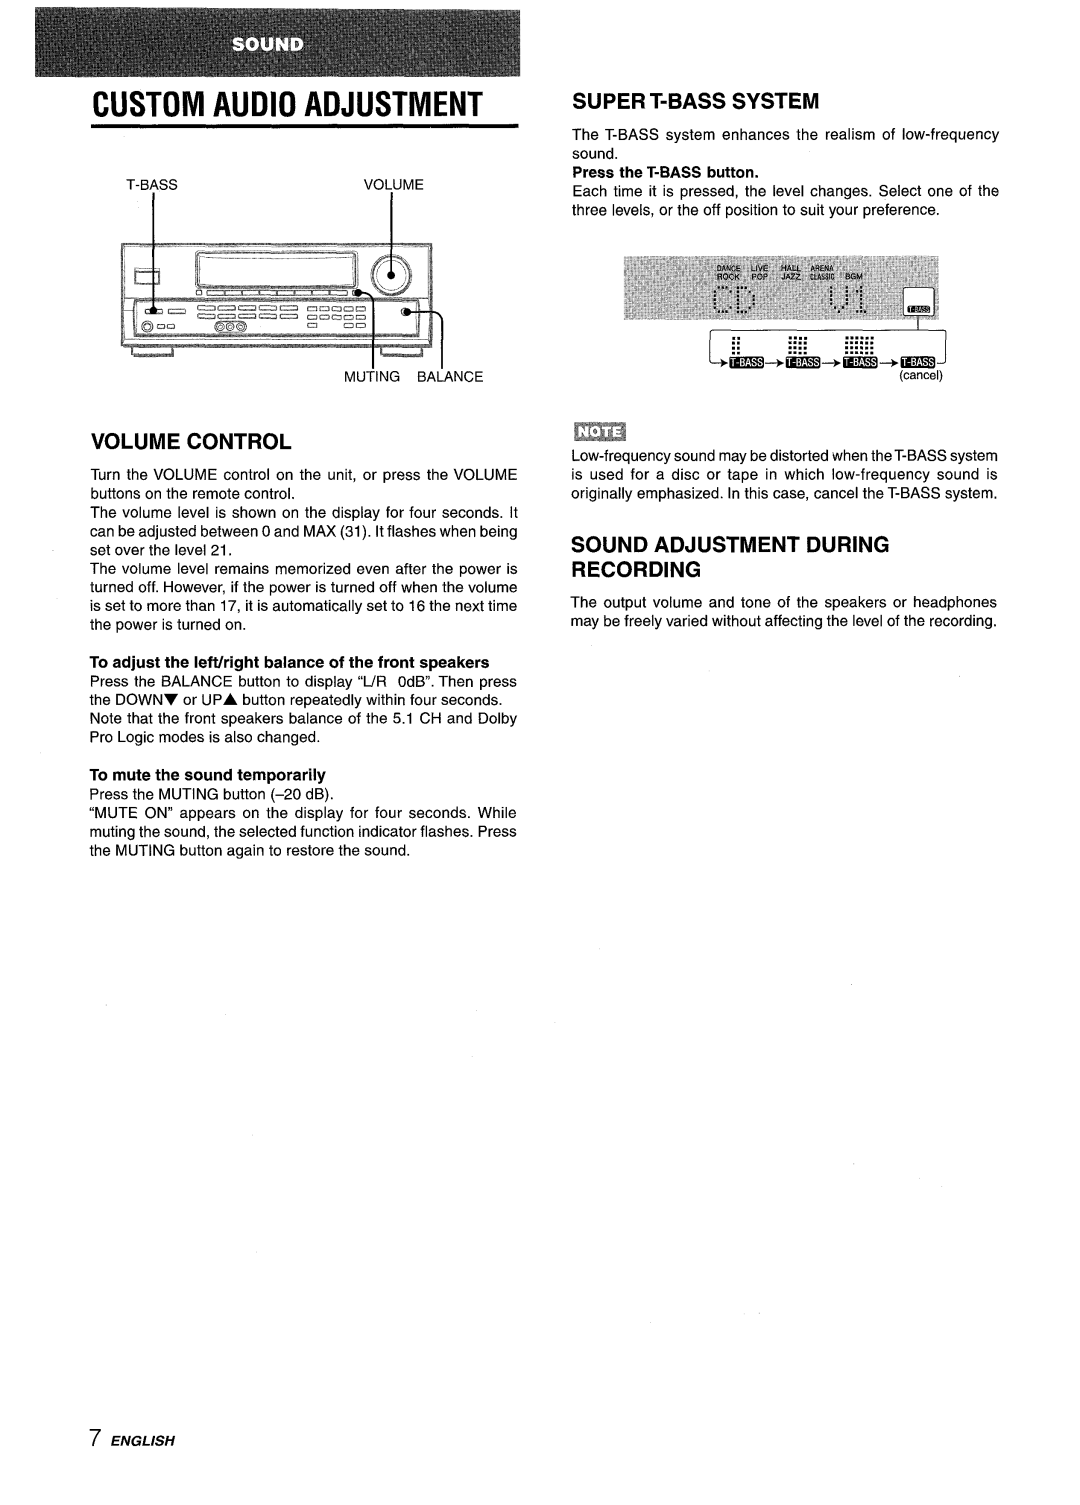 Aiwa AV-D25 manual Custom Audio Adjustment, Super T-Bass System, Volume Control, Sound Adjustment During Recording 